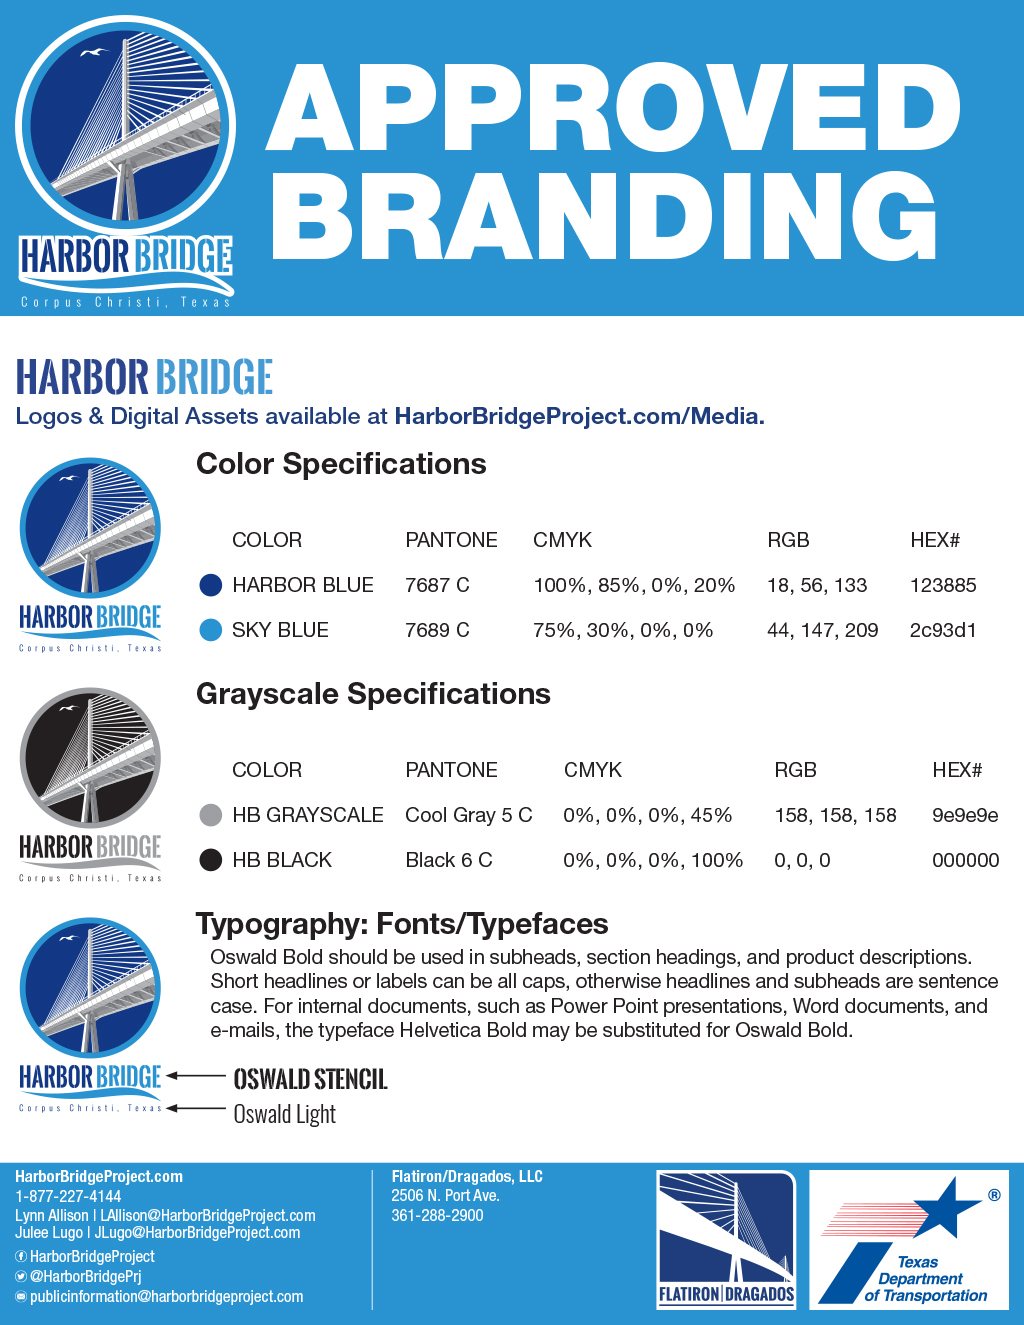 Harbor Bridge Project - Approved Branding